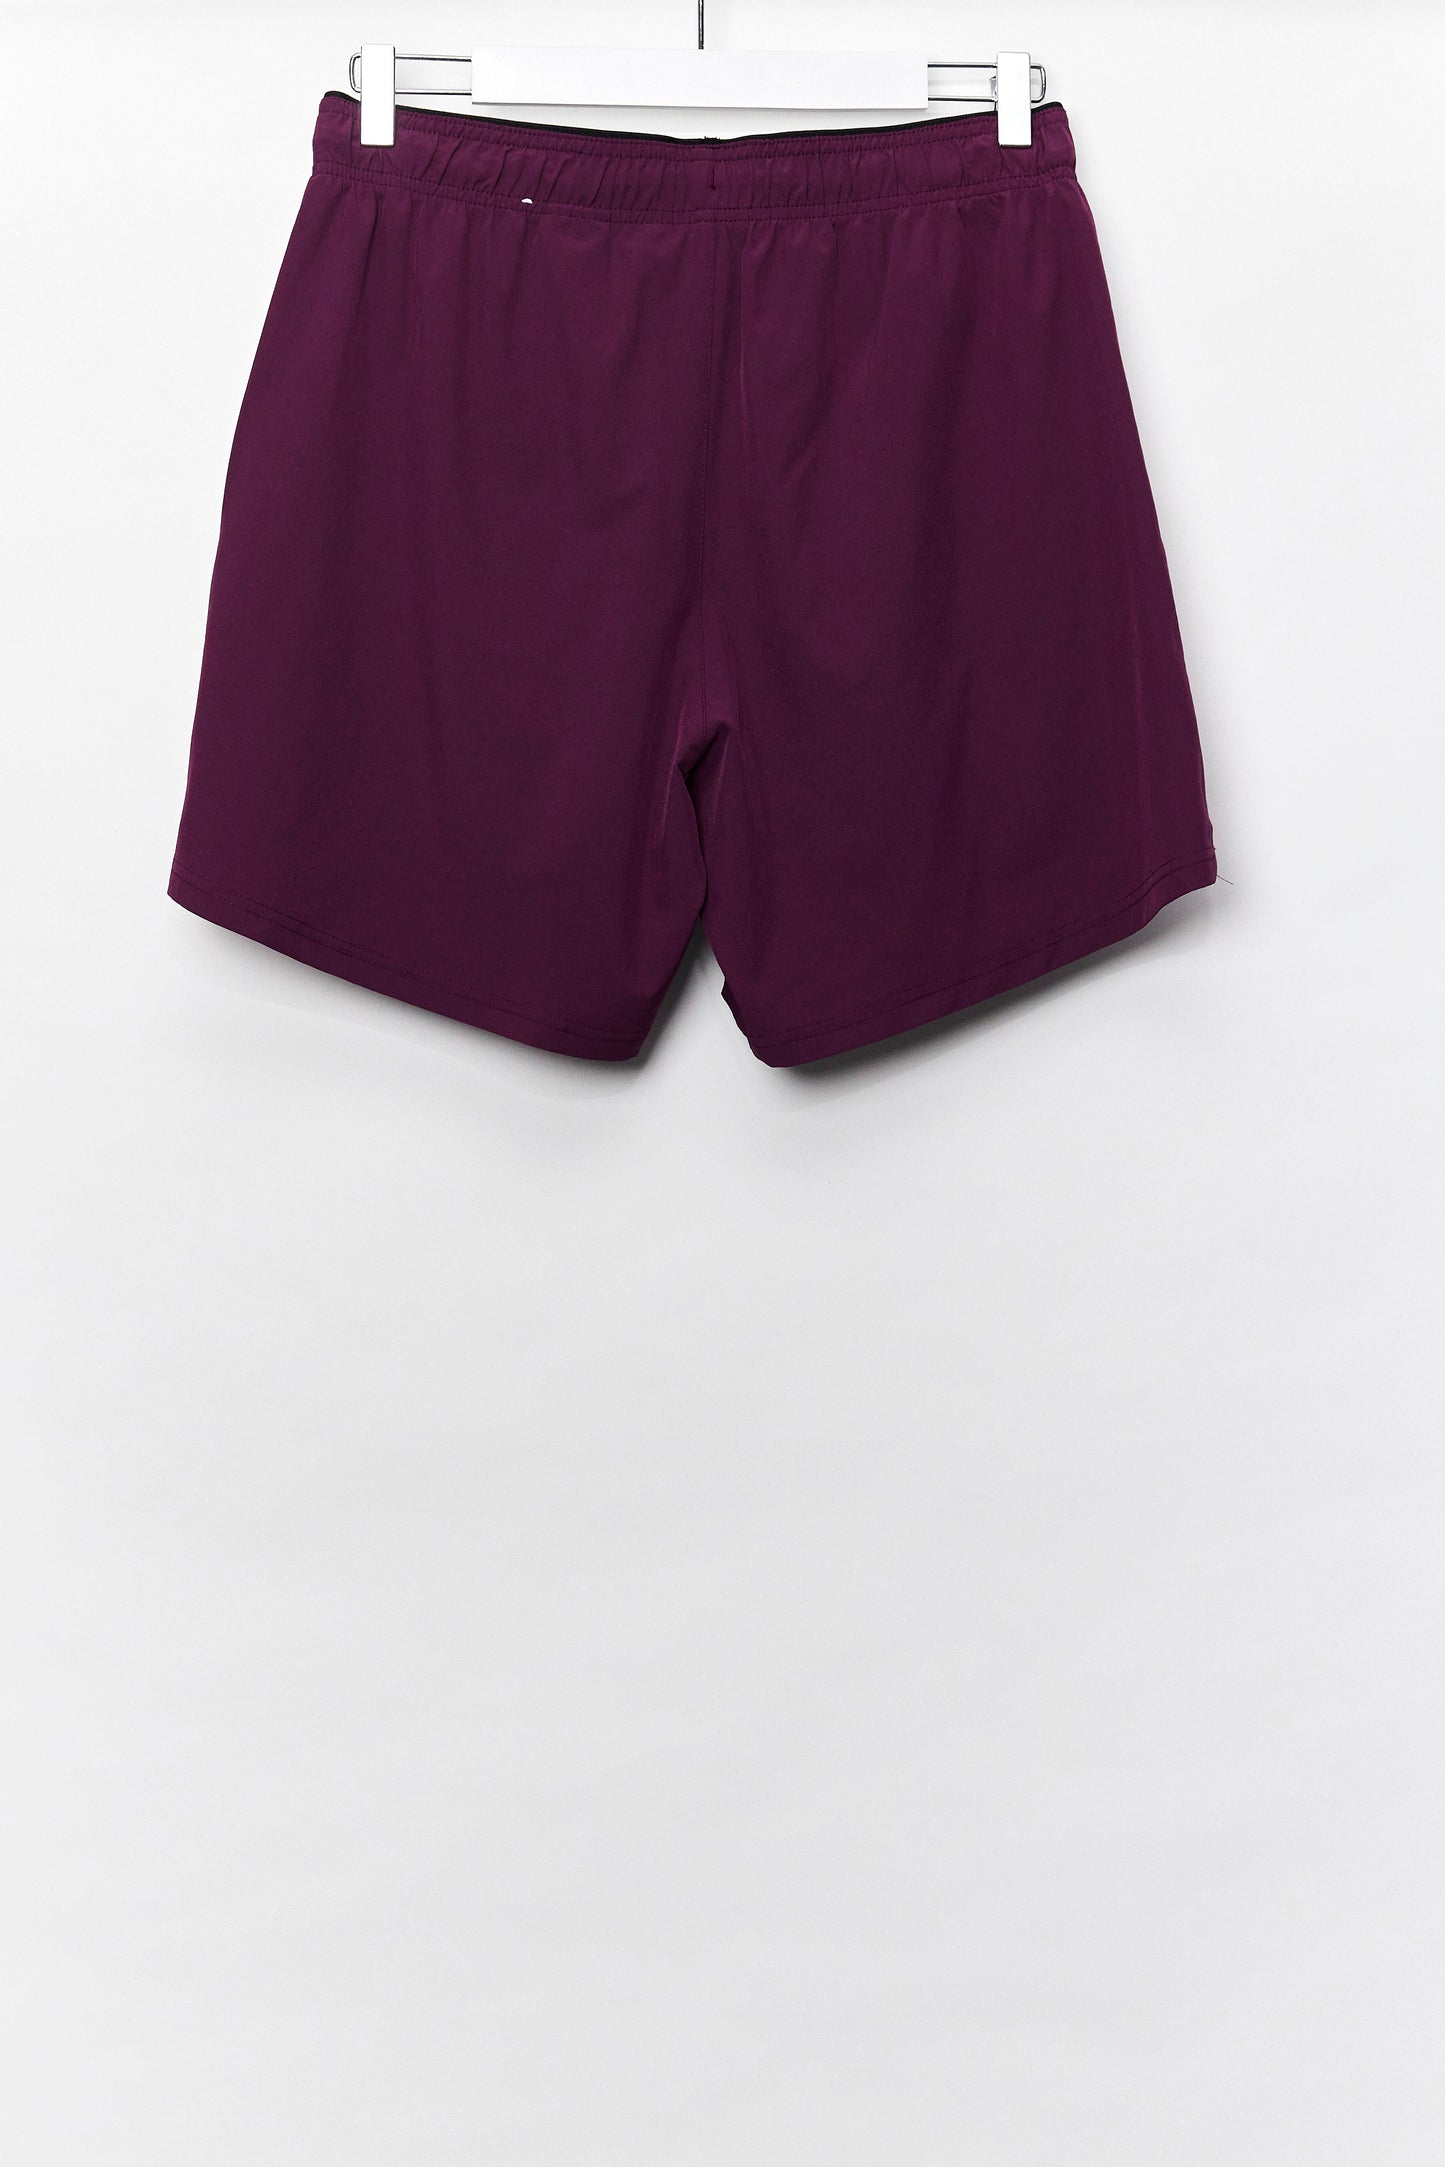 Mens M&S Move Purple Sport Shorts Size Small